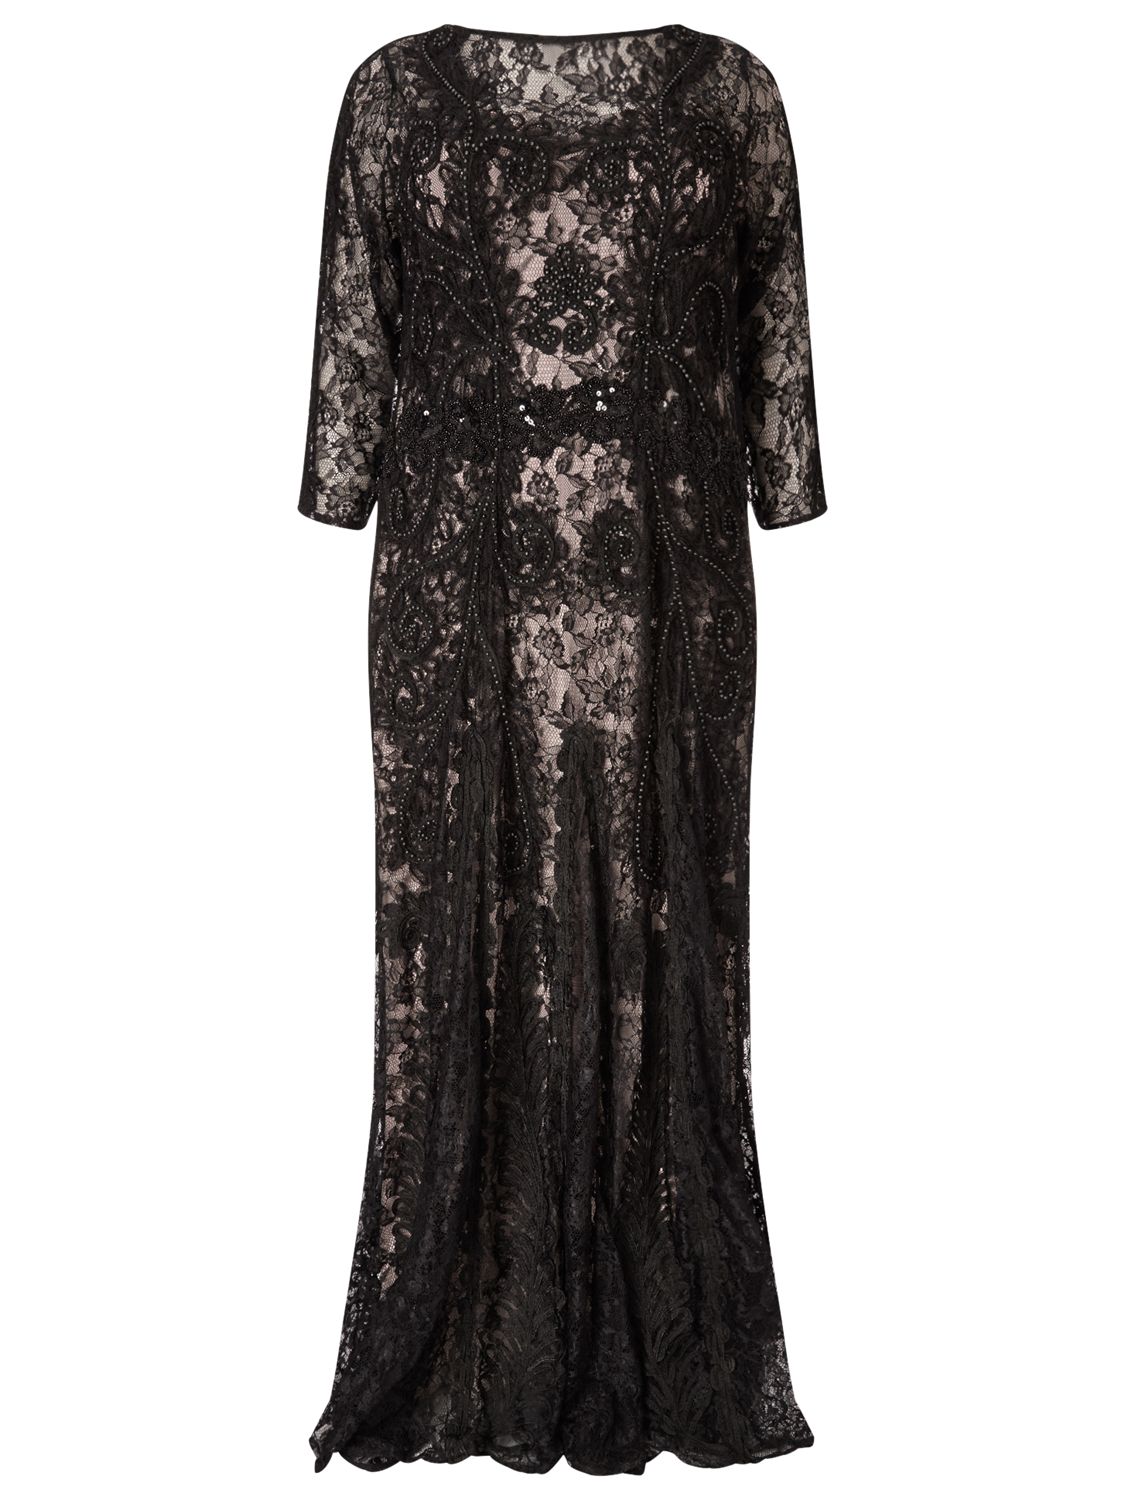 Studio 8 Cara Lace Maxi Dress, Black at John Lewis & Partners